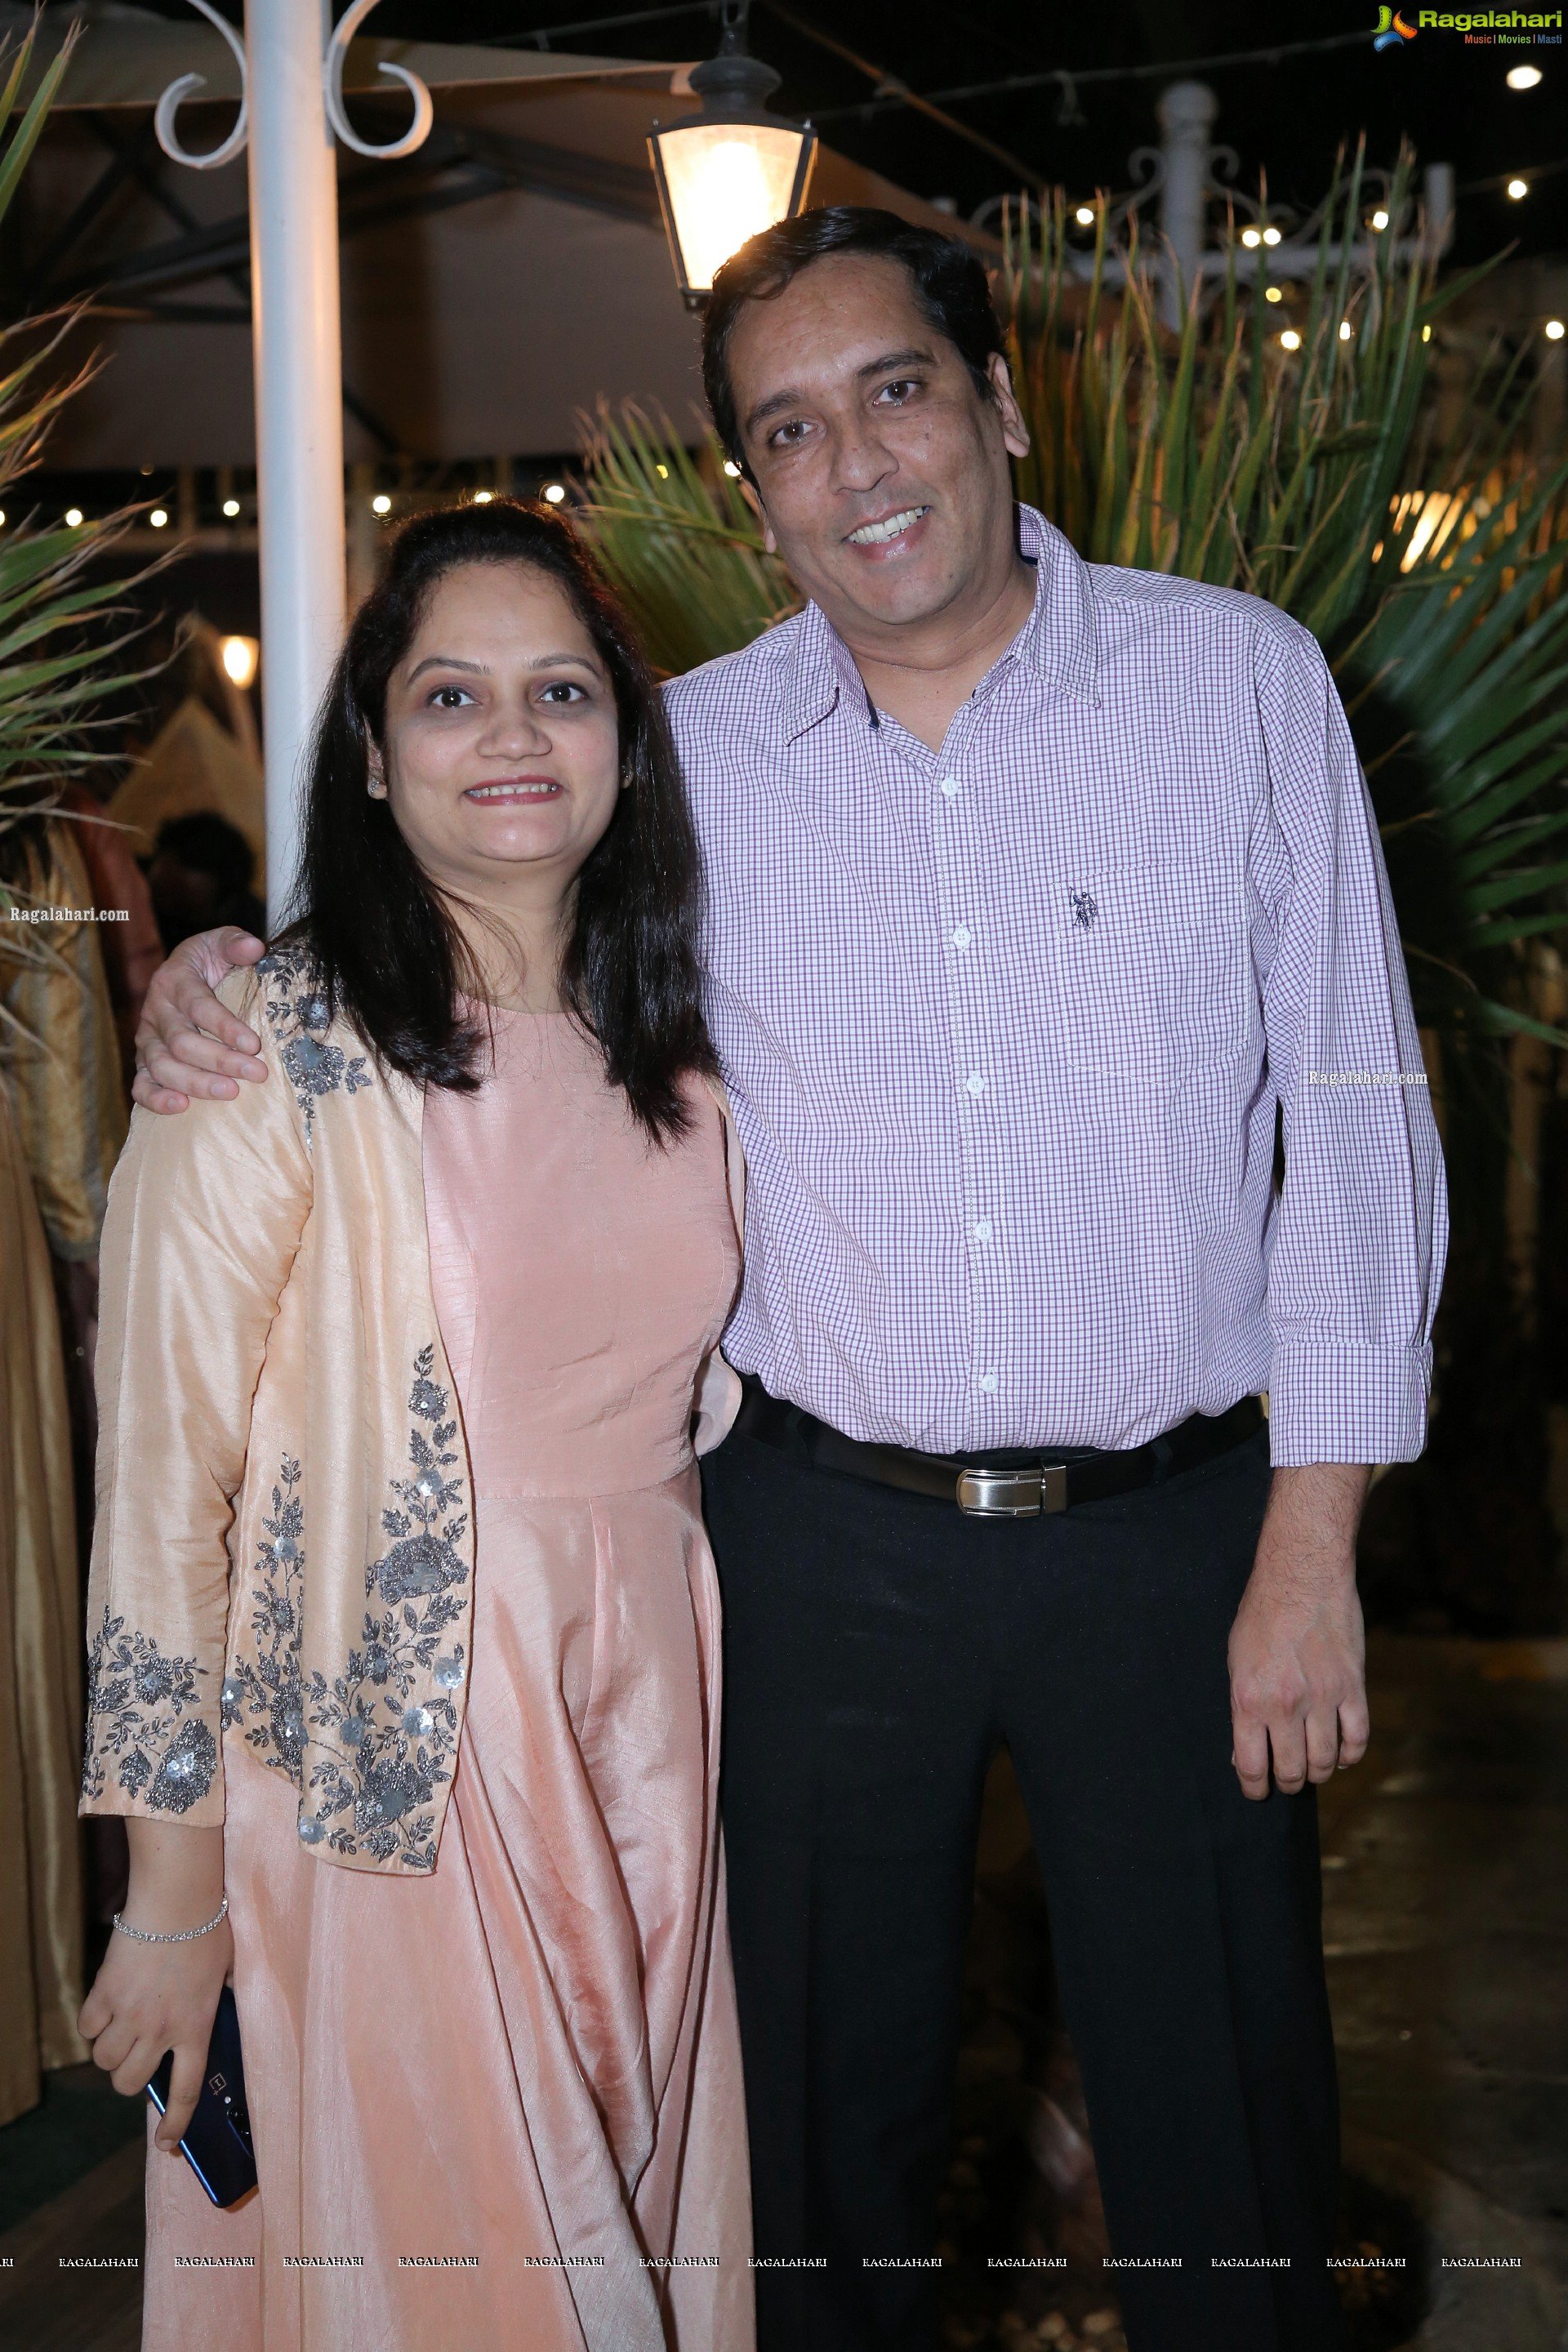 Rakshita & Chaitnya Bandola Ceremony at Makobrew World Coffee Bar